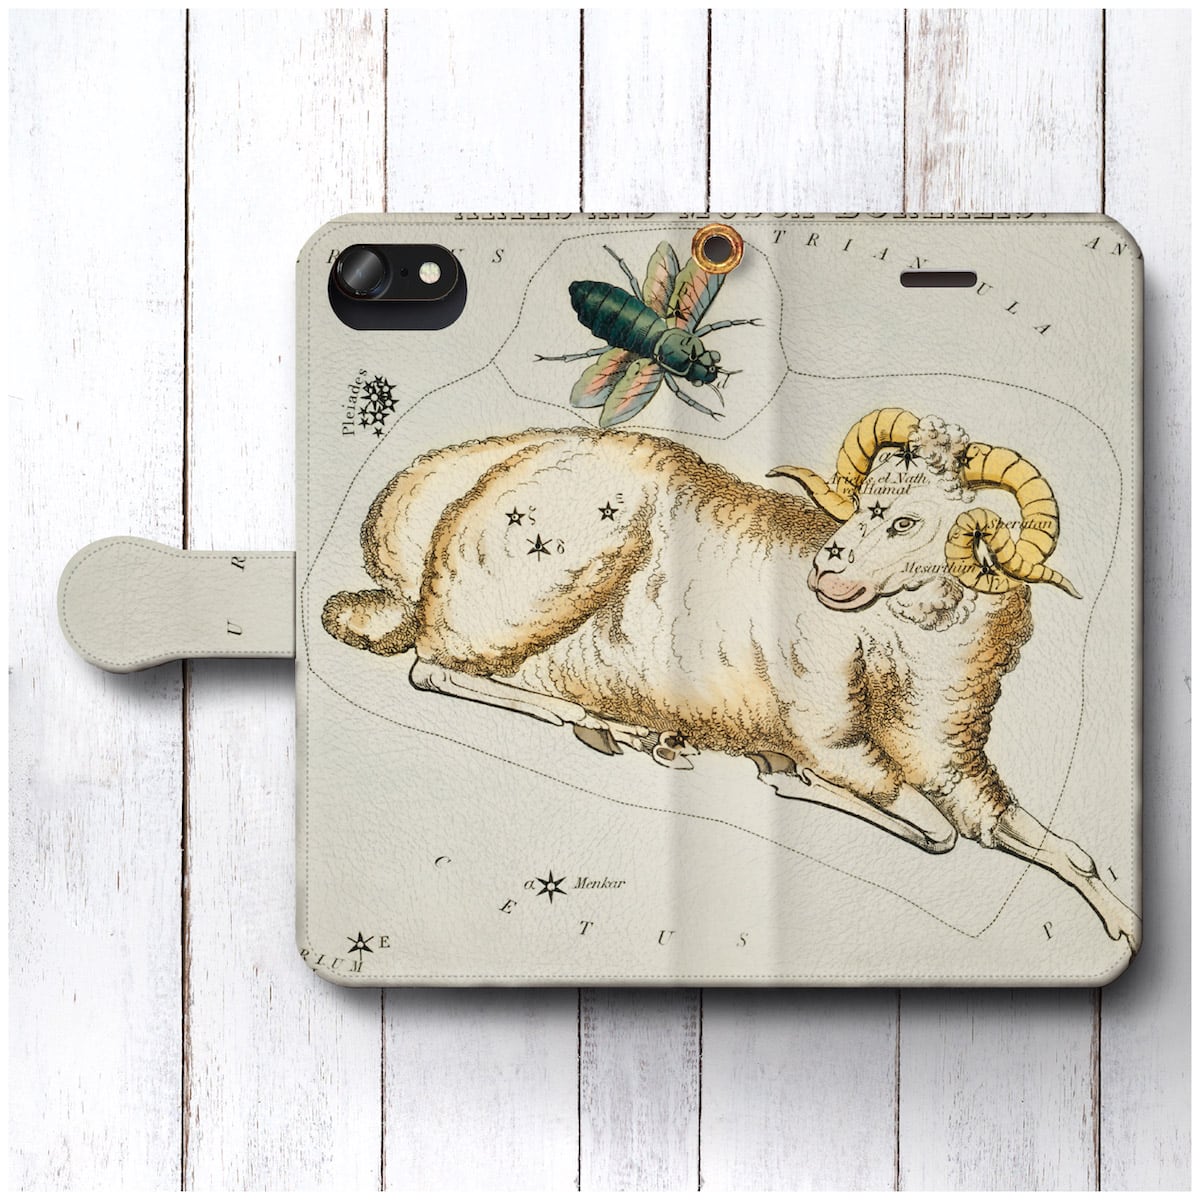 iPhone6sPlus ケース スマホケース 全機種対応 手帳型 絵画 ケース 人気 あいふぉん ケース 丈夫 耐衝撃 牡羊座 天文図